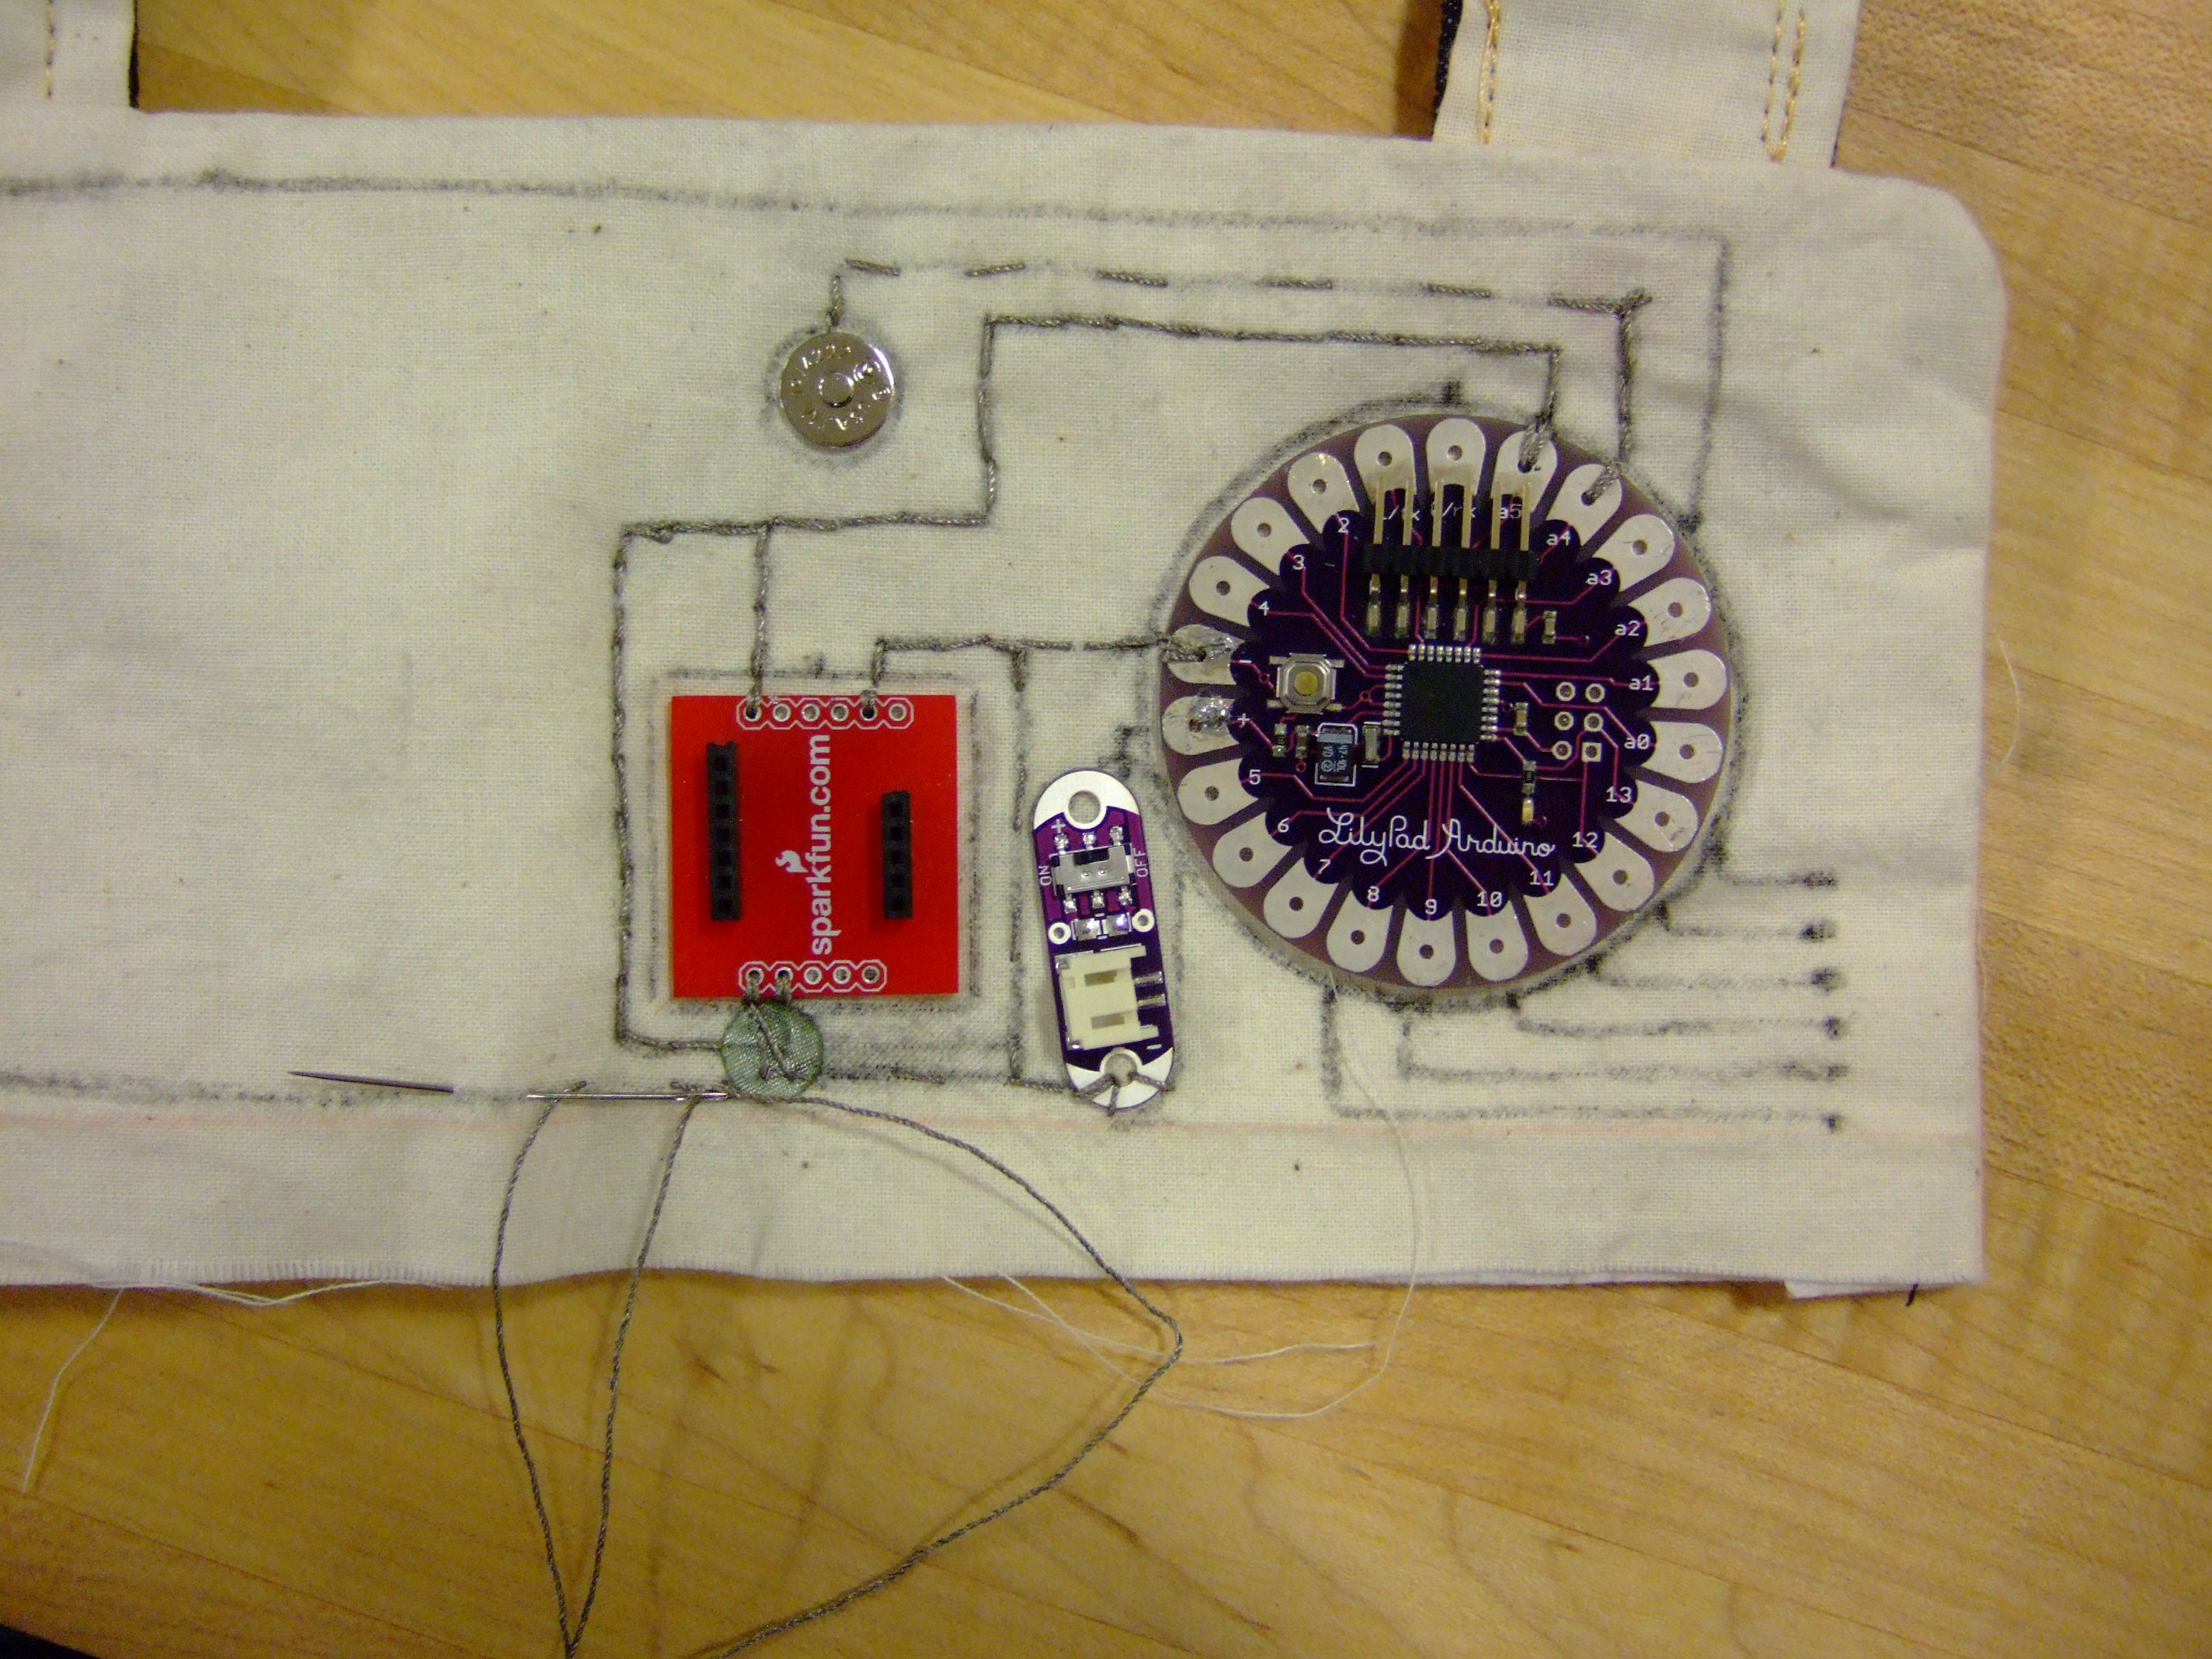 Sewing prototype circuit